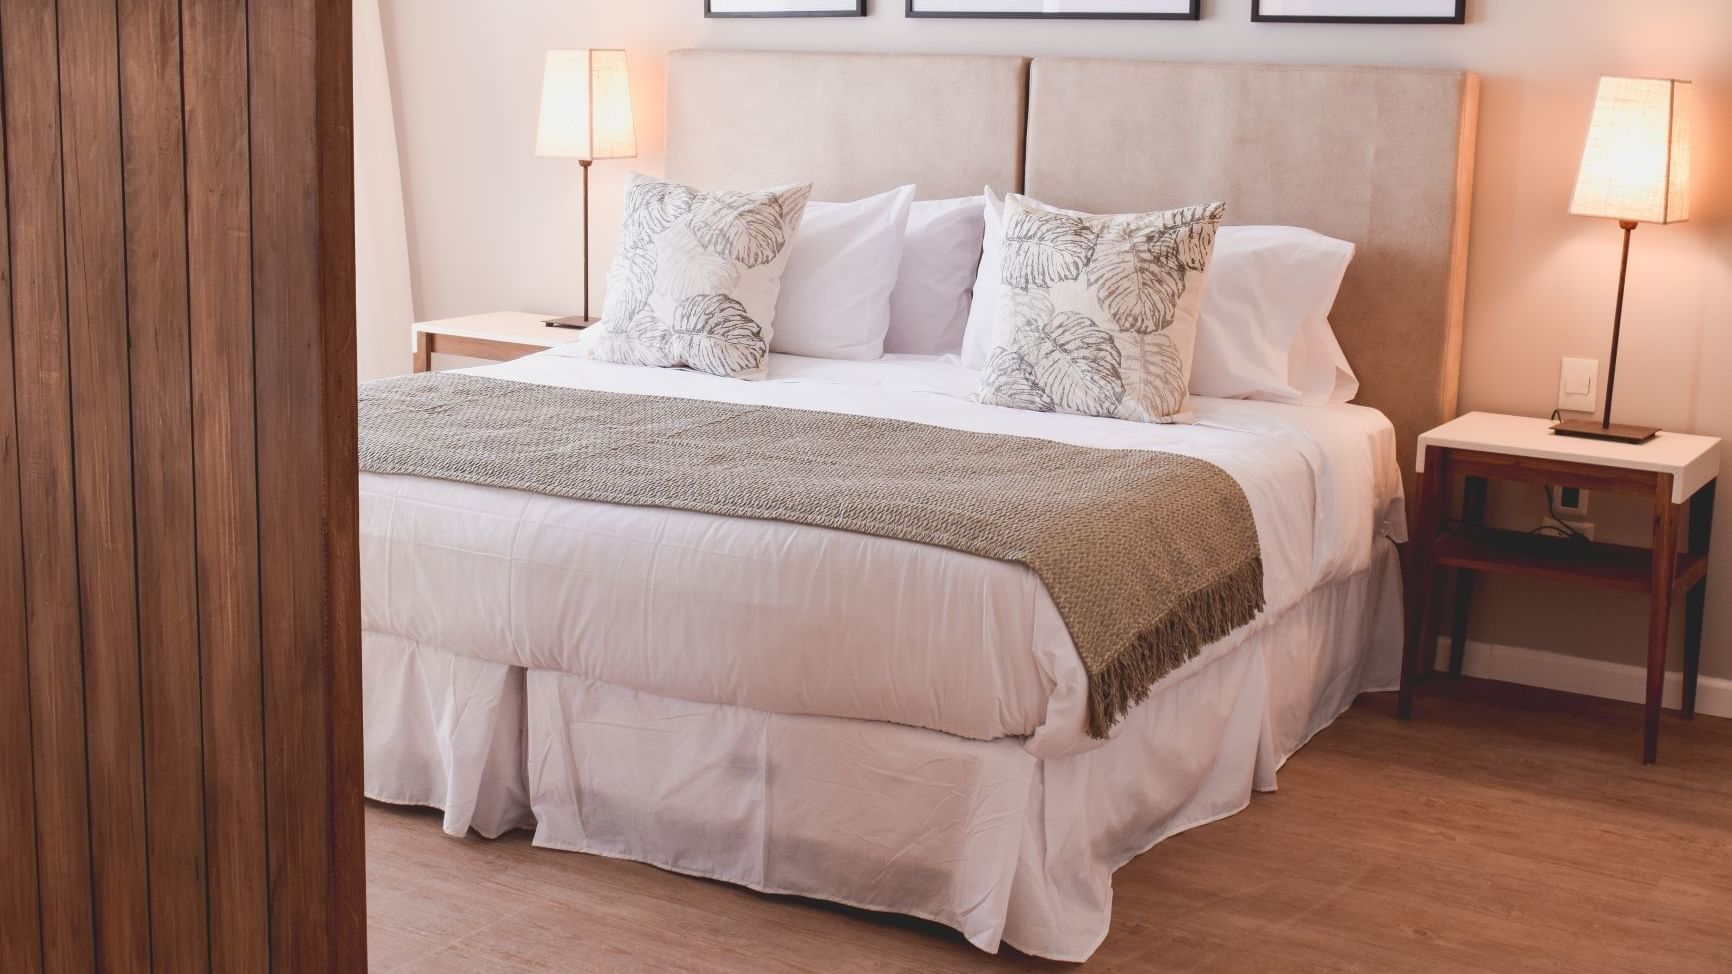 Bedroom arrangement in Executive Suite at DOT Hotels